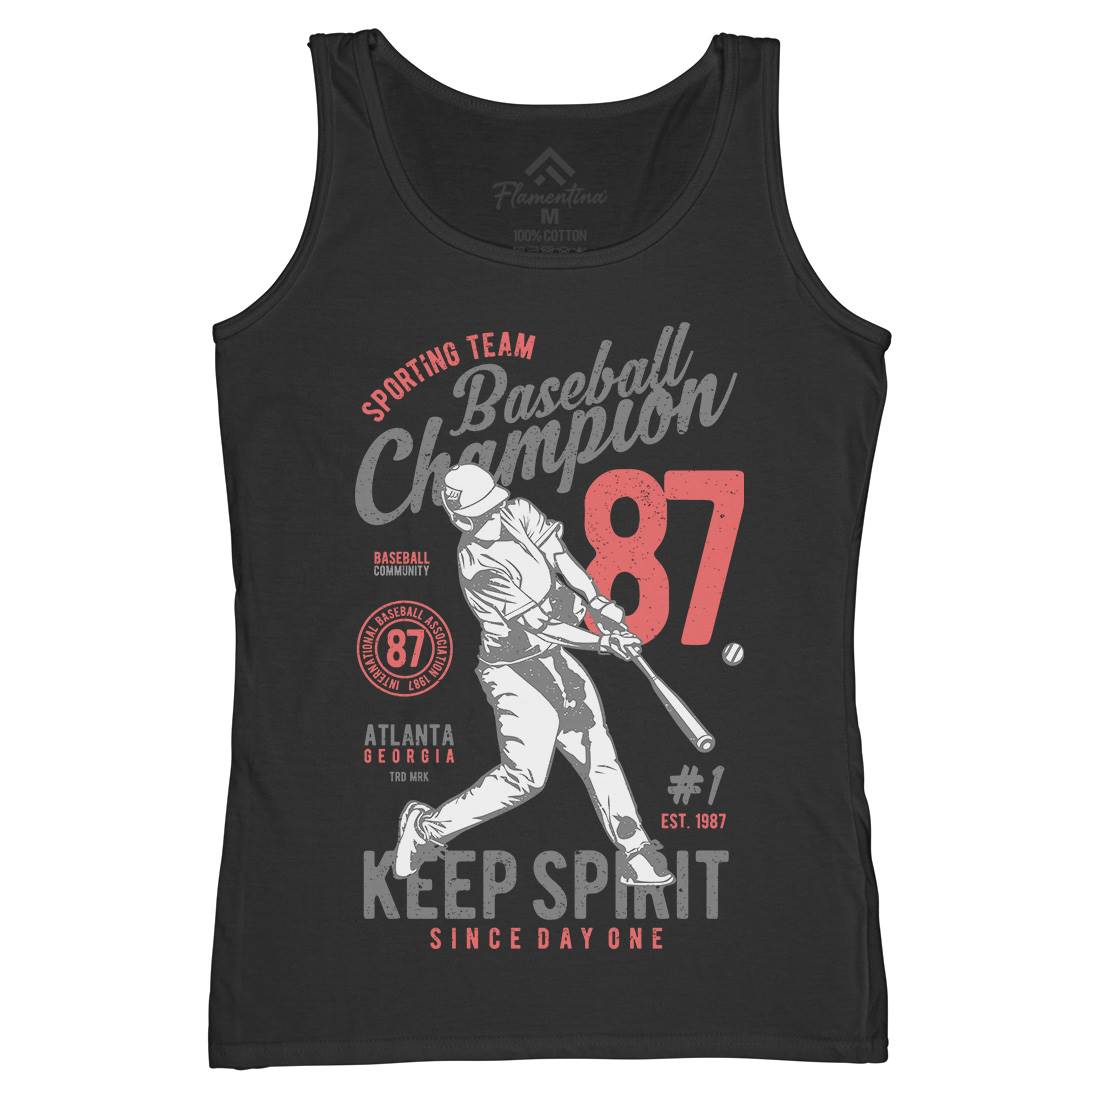 Baseball Champion Womens Organic Tank Top Vest Sport A616